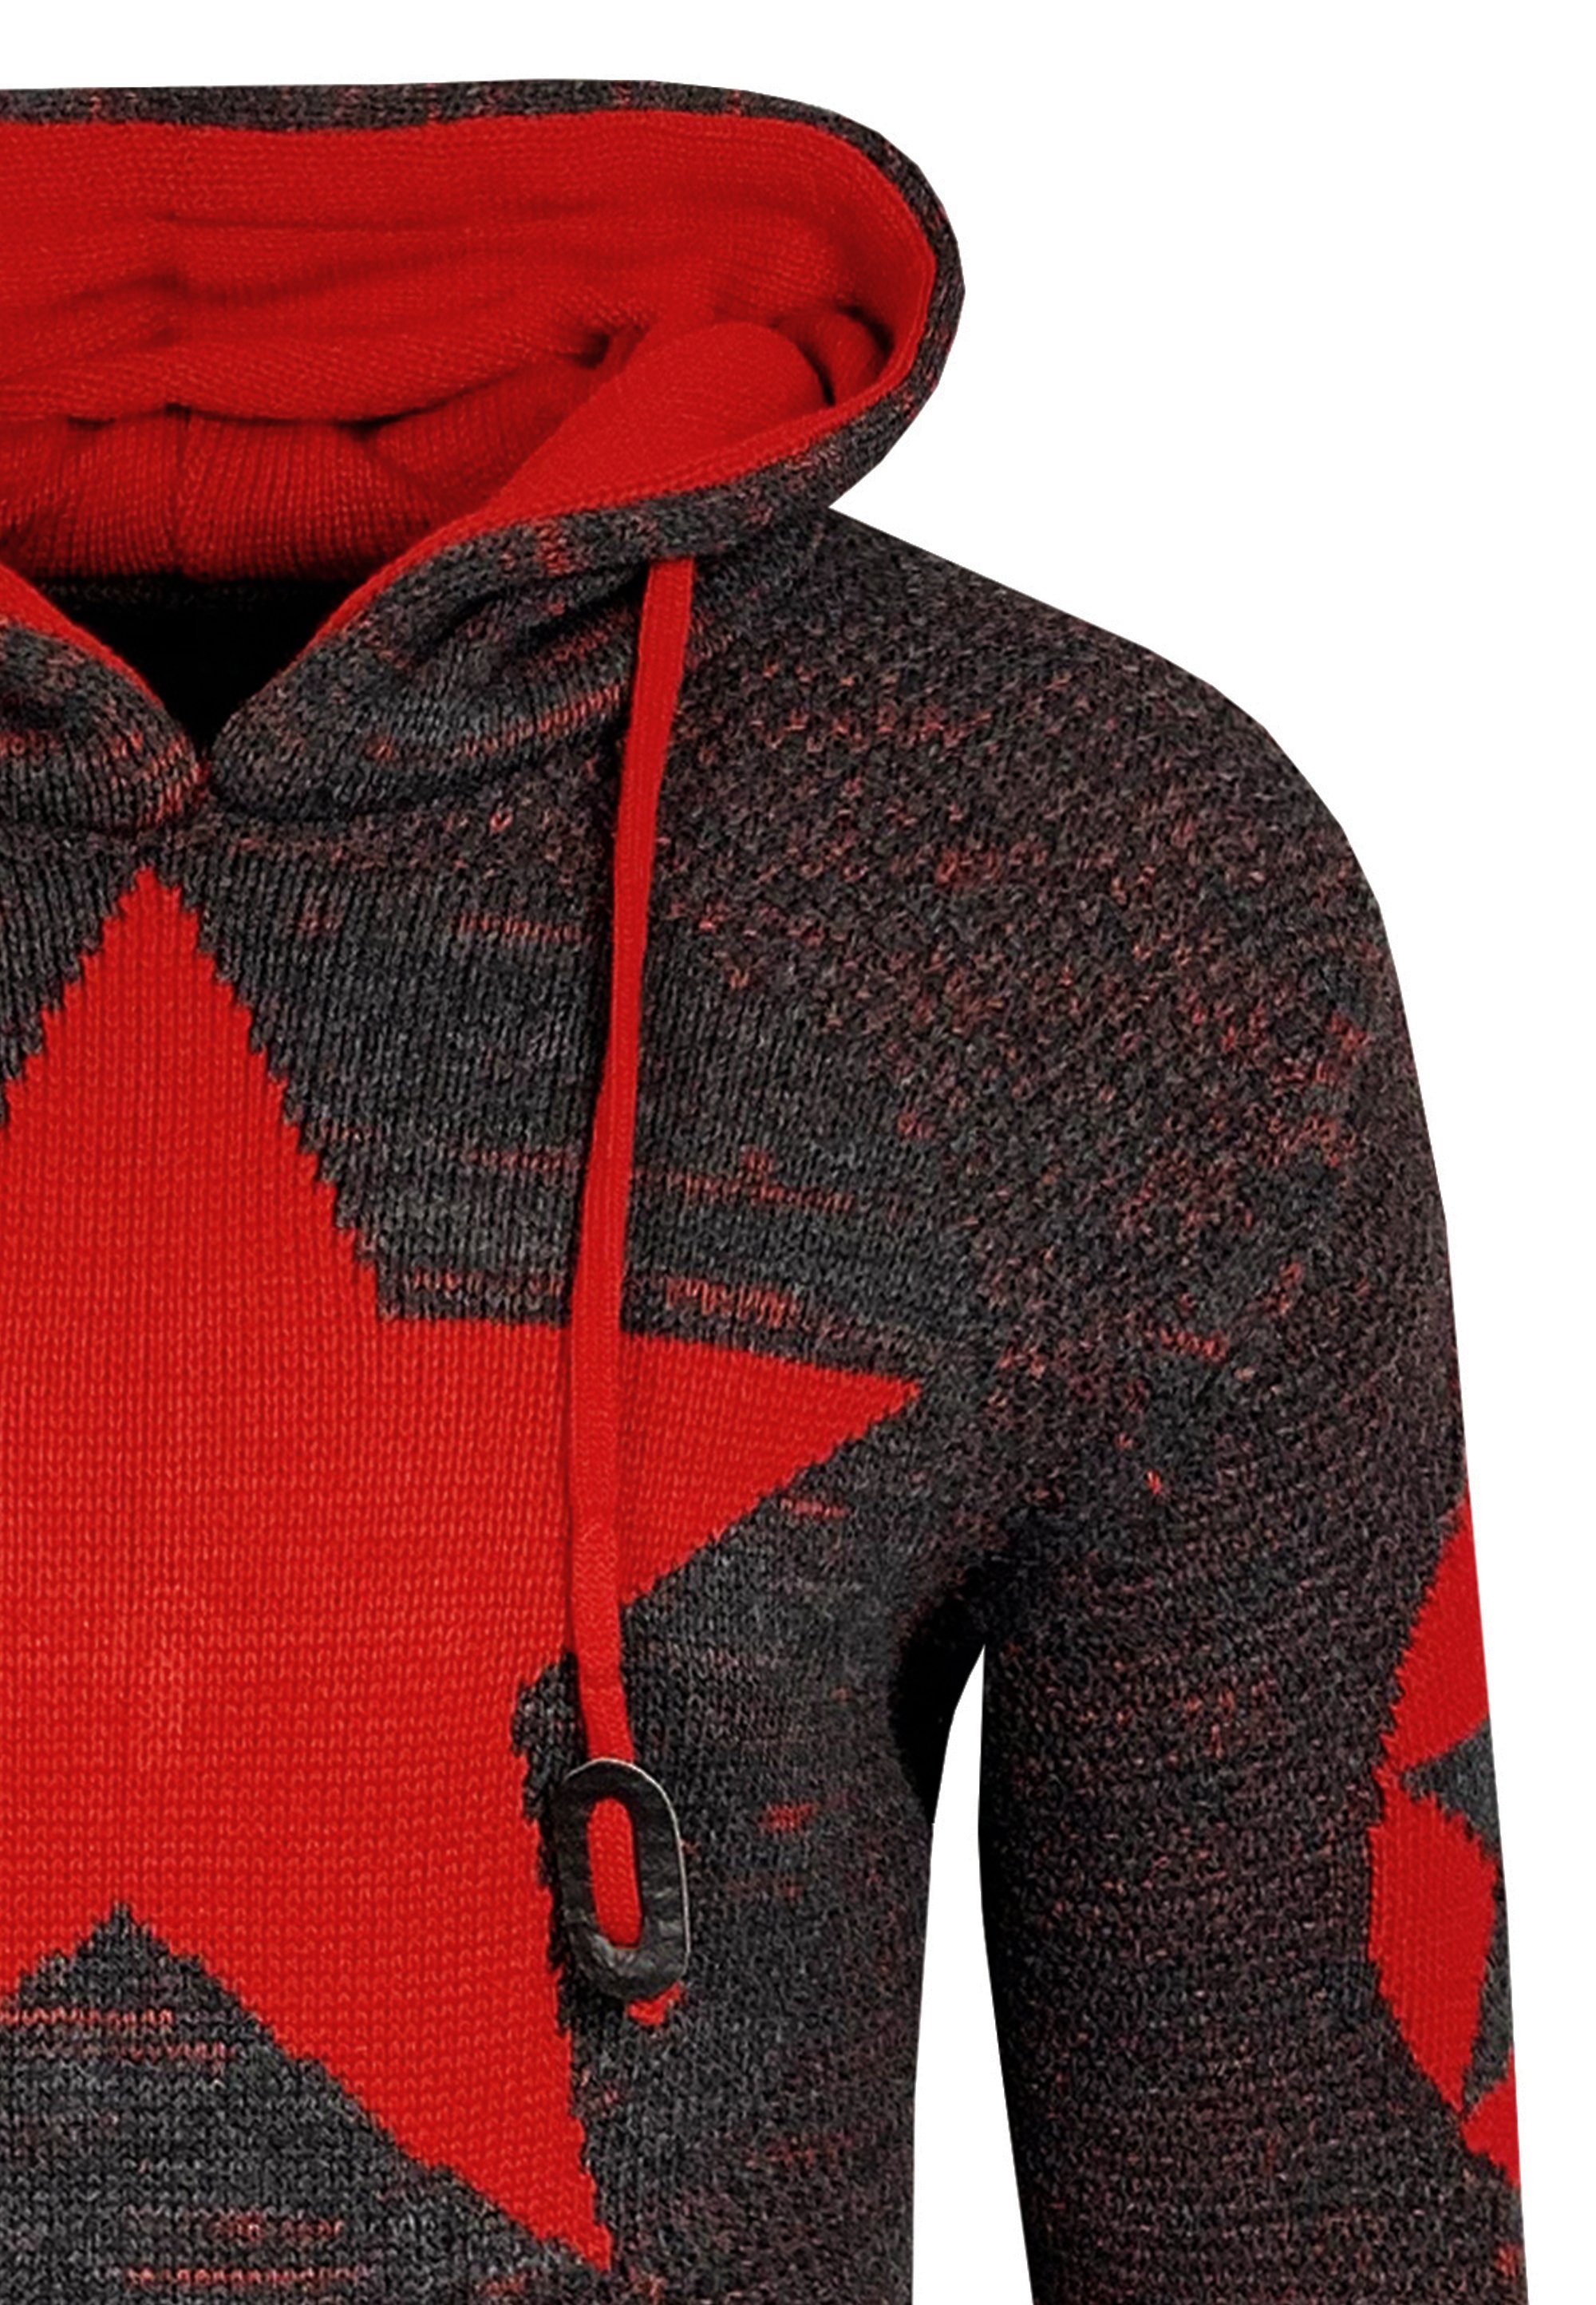 Rusty Neal Kapuzensweatshirt mit anthrazit-rot großem Stern-Design